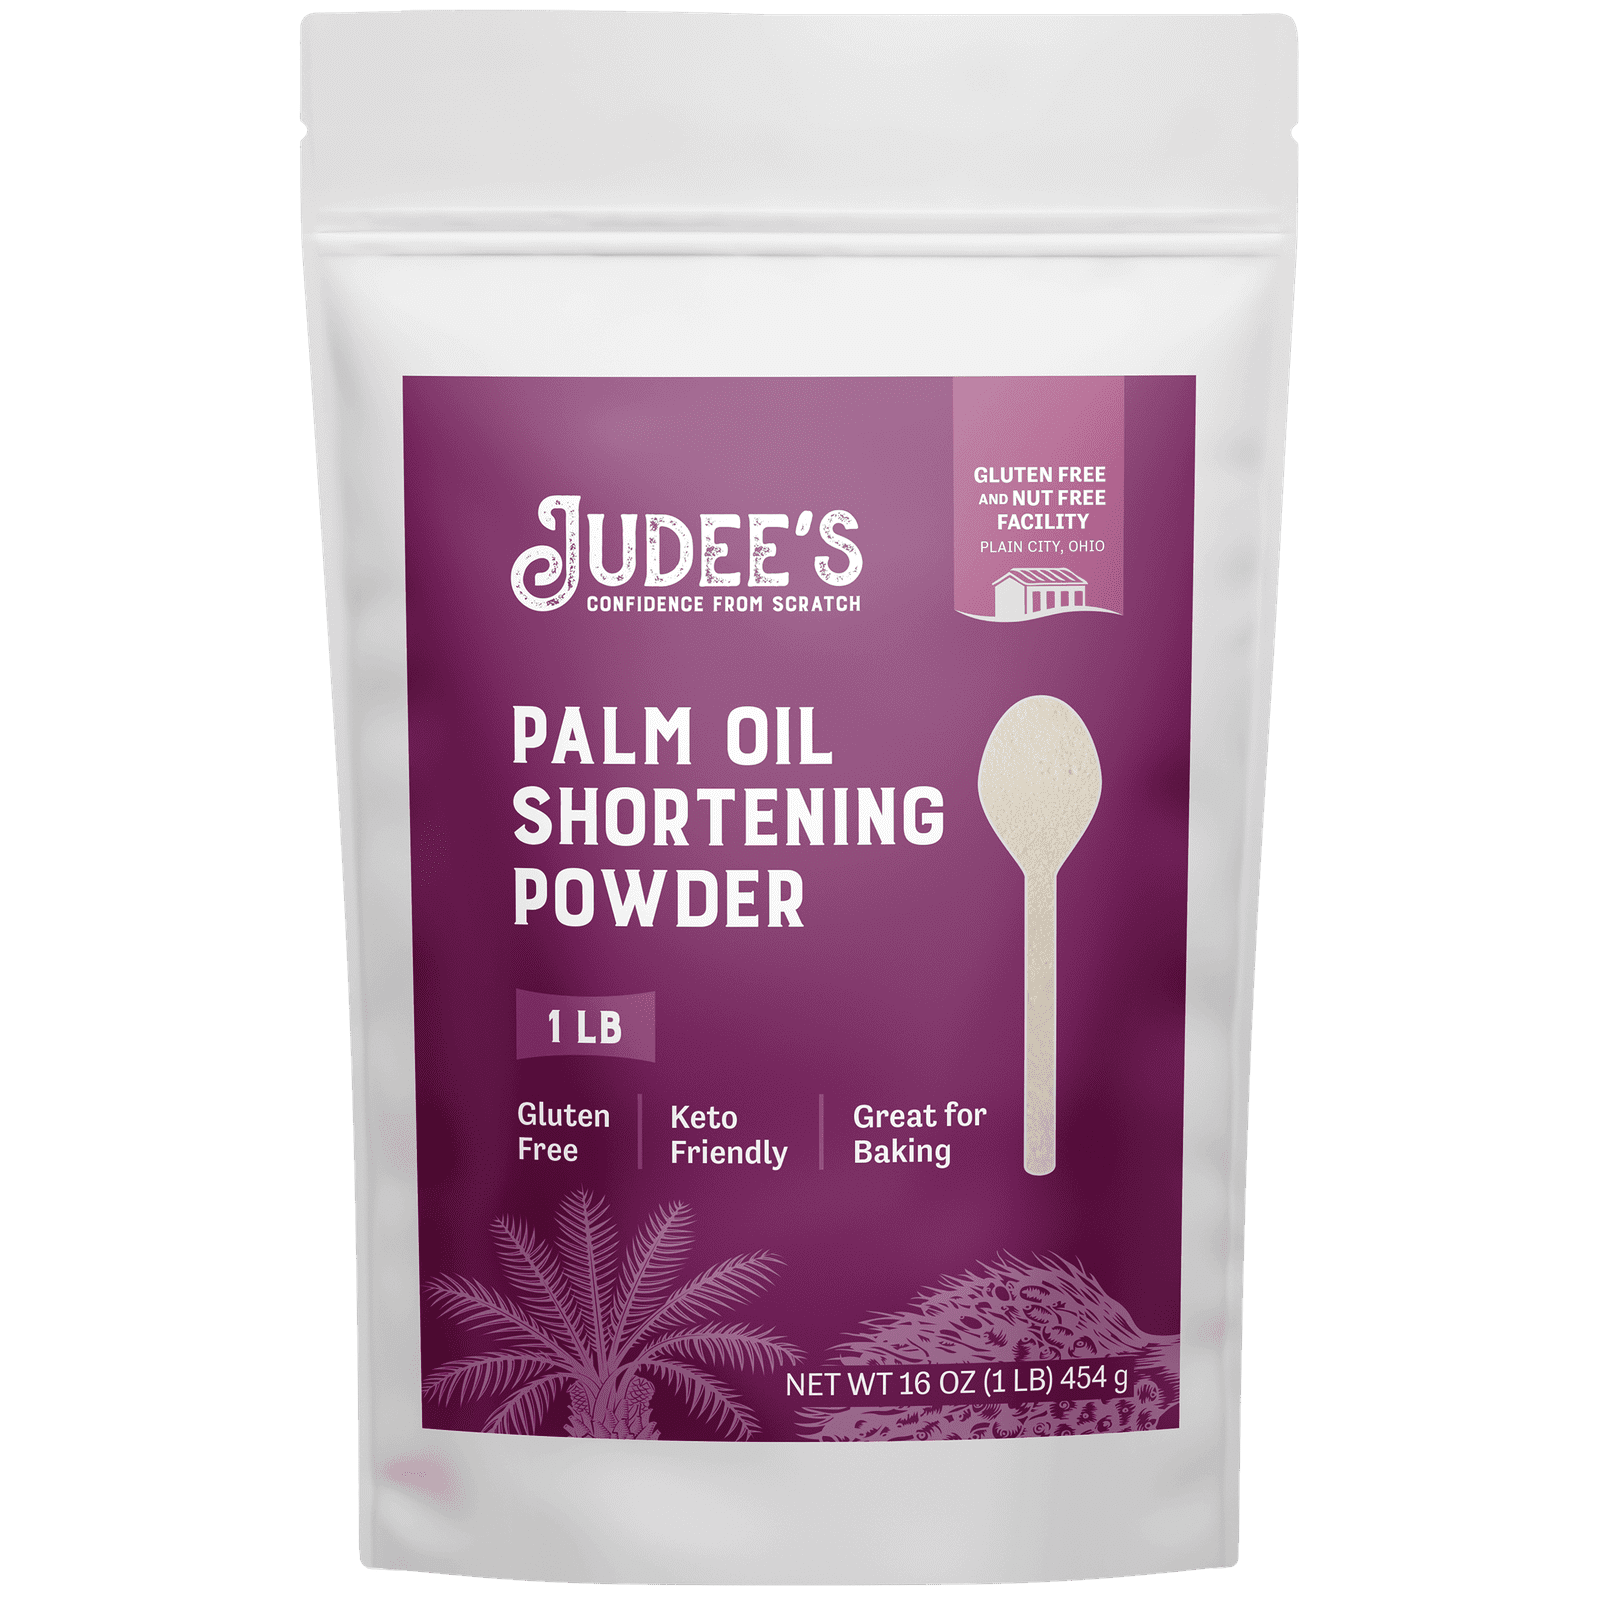 Palm Oil Shortening Powder